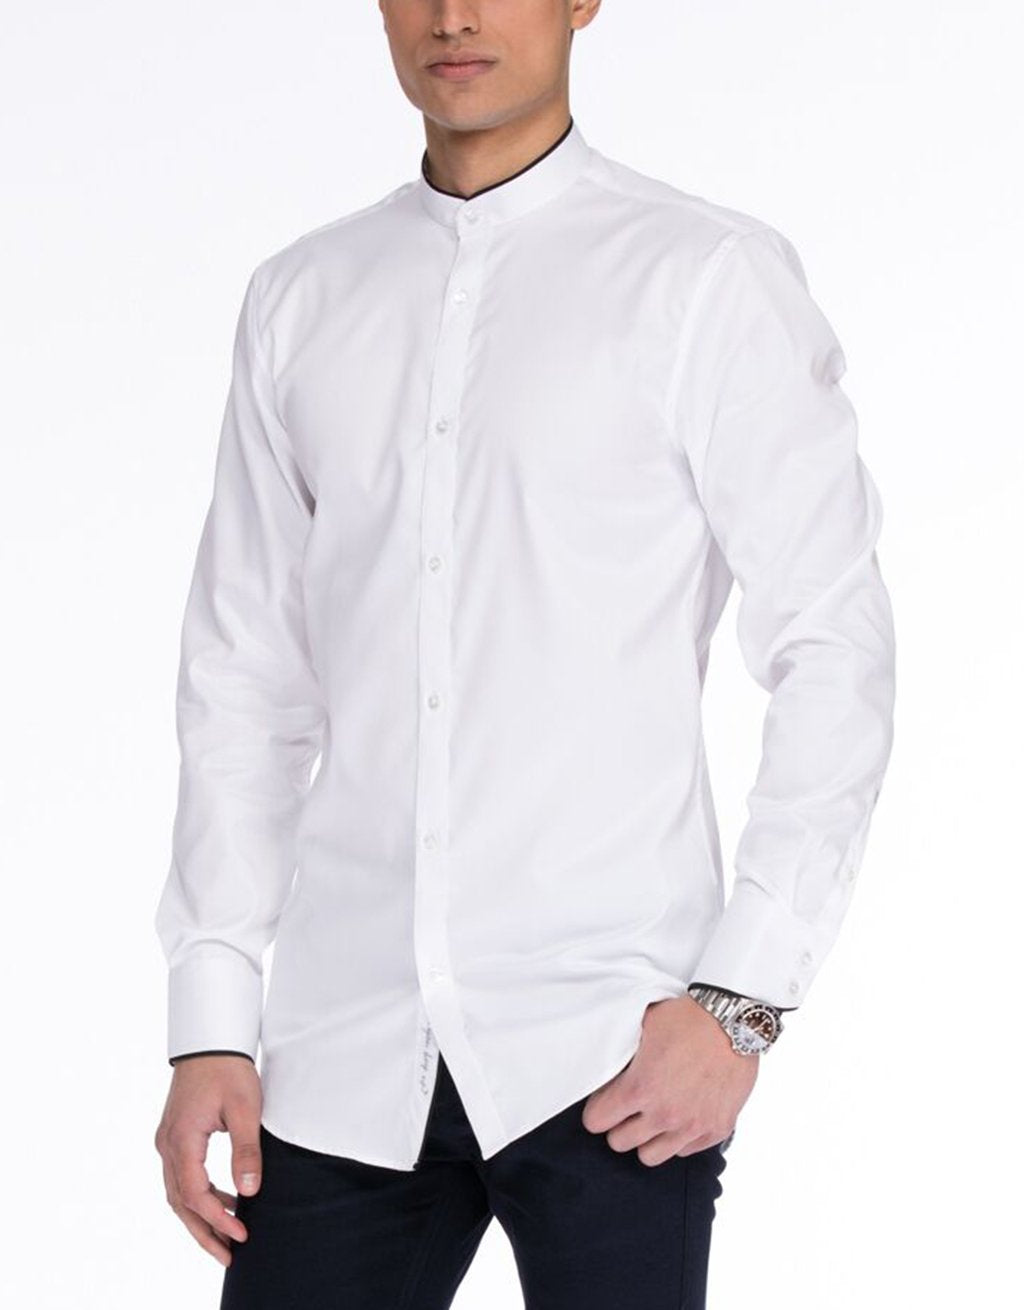 FRED Long Sleeve Woven White Shirt